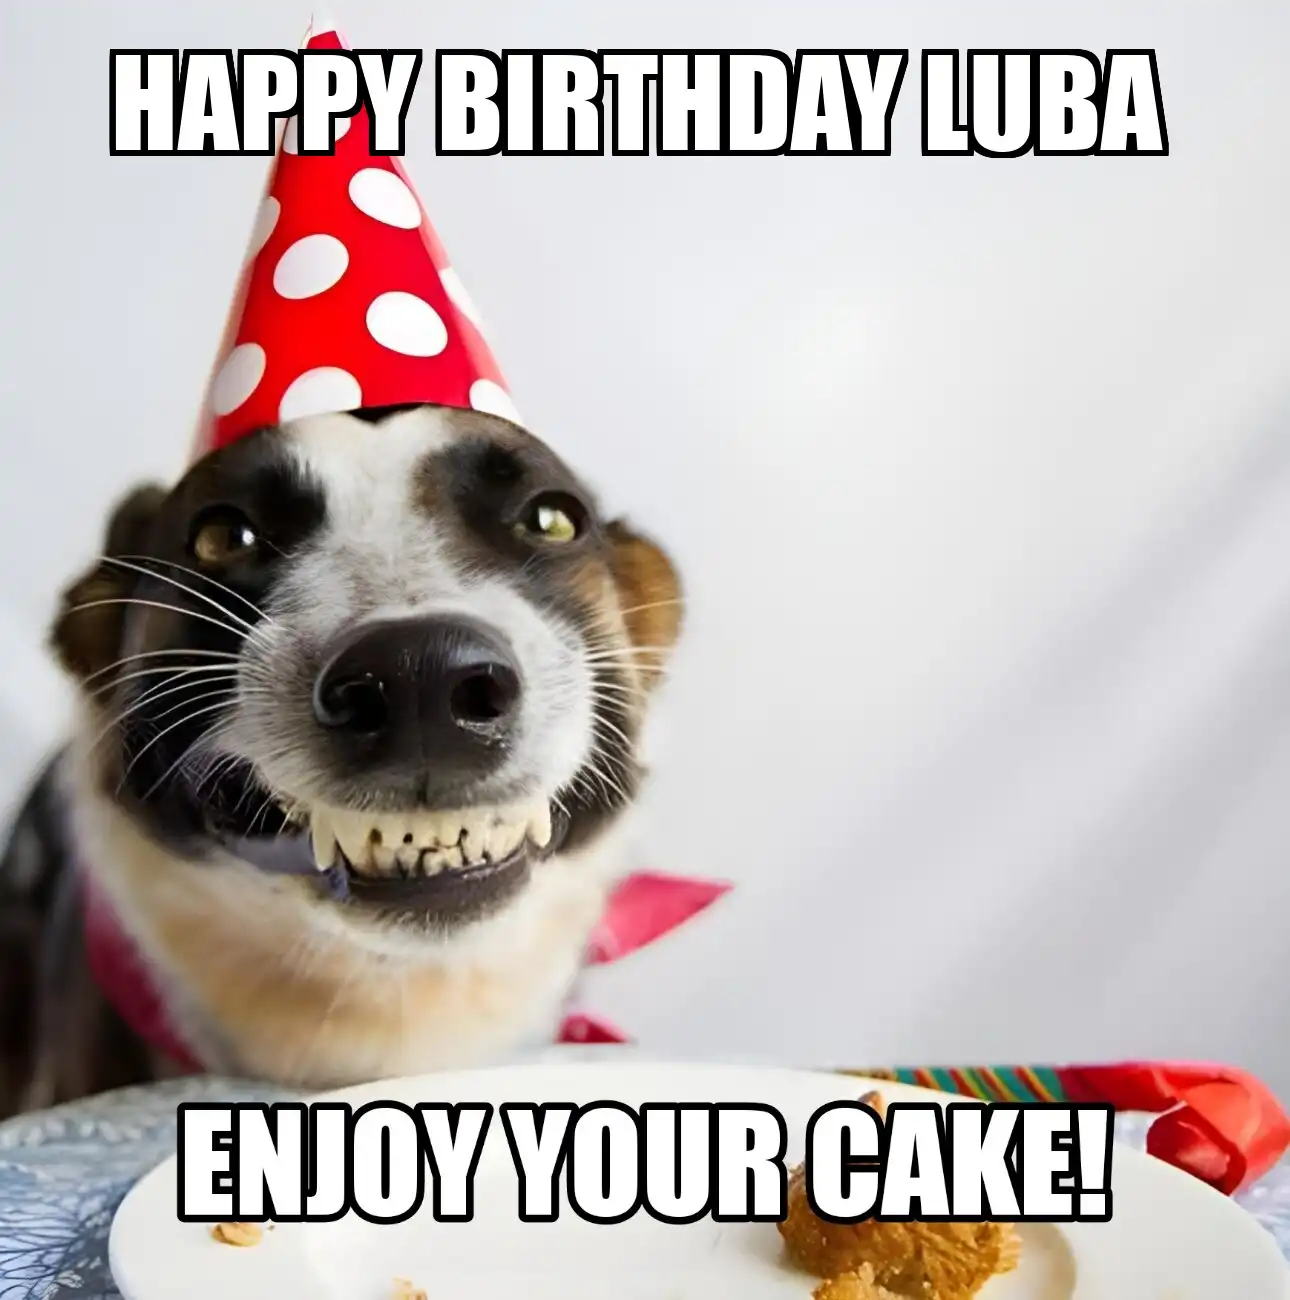 Happy Birthday Luba Enjoy Your Cake Dog Meme